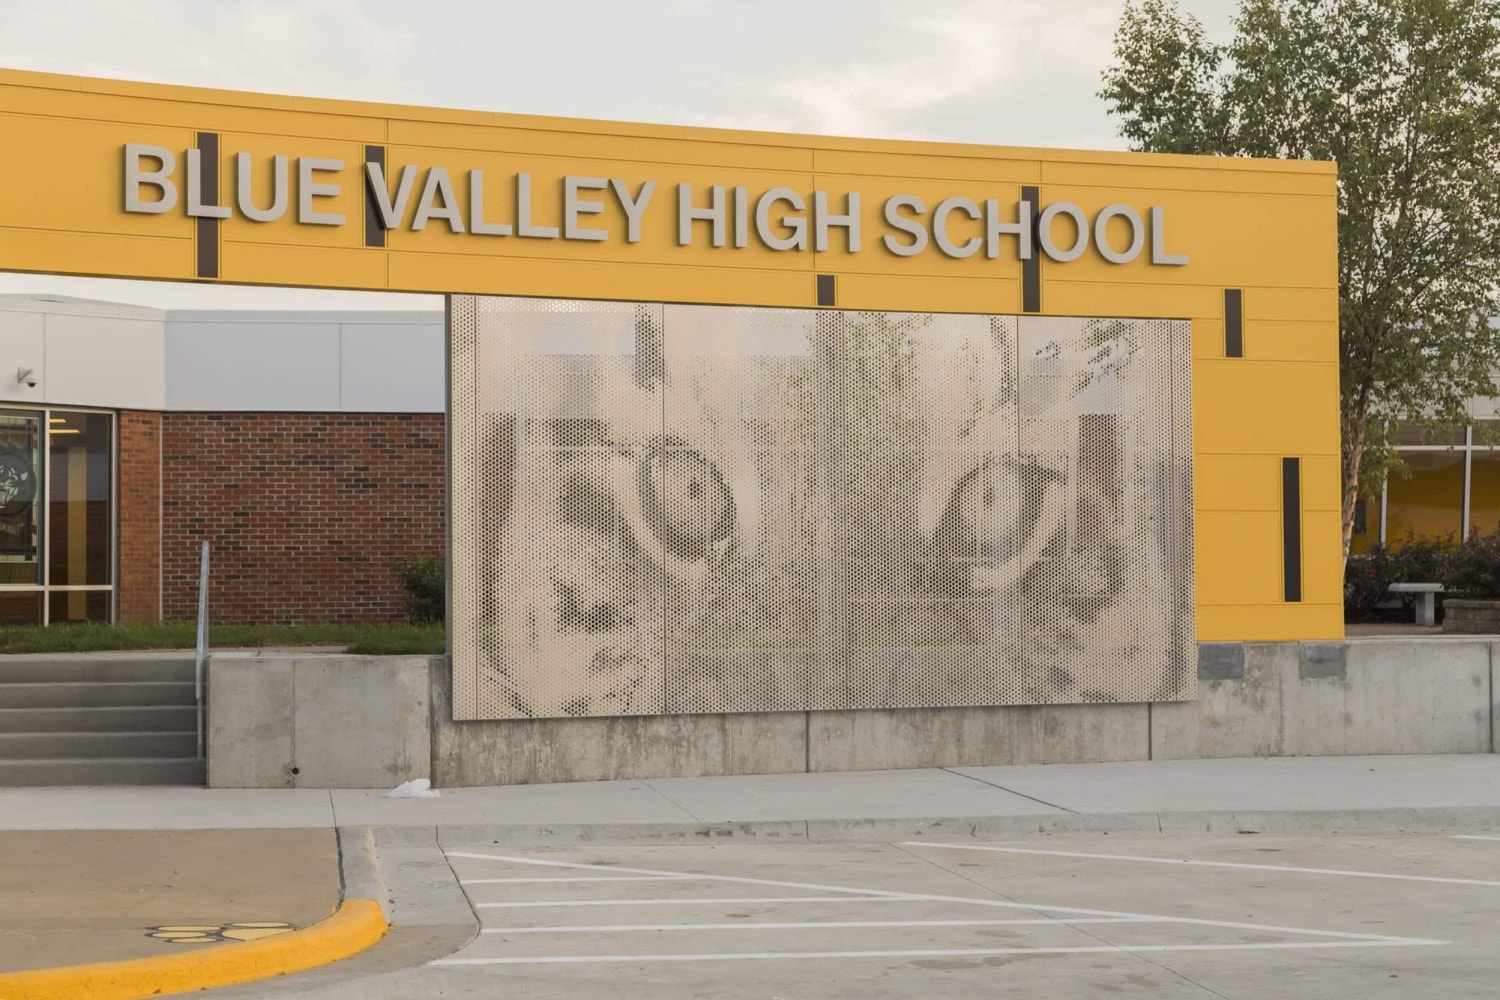 Angel hair stainless steel ImageWall screens depicting the Blue Valley High School mascot.